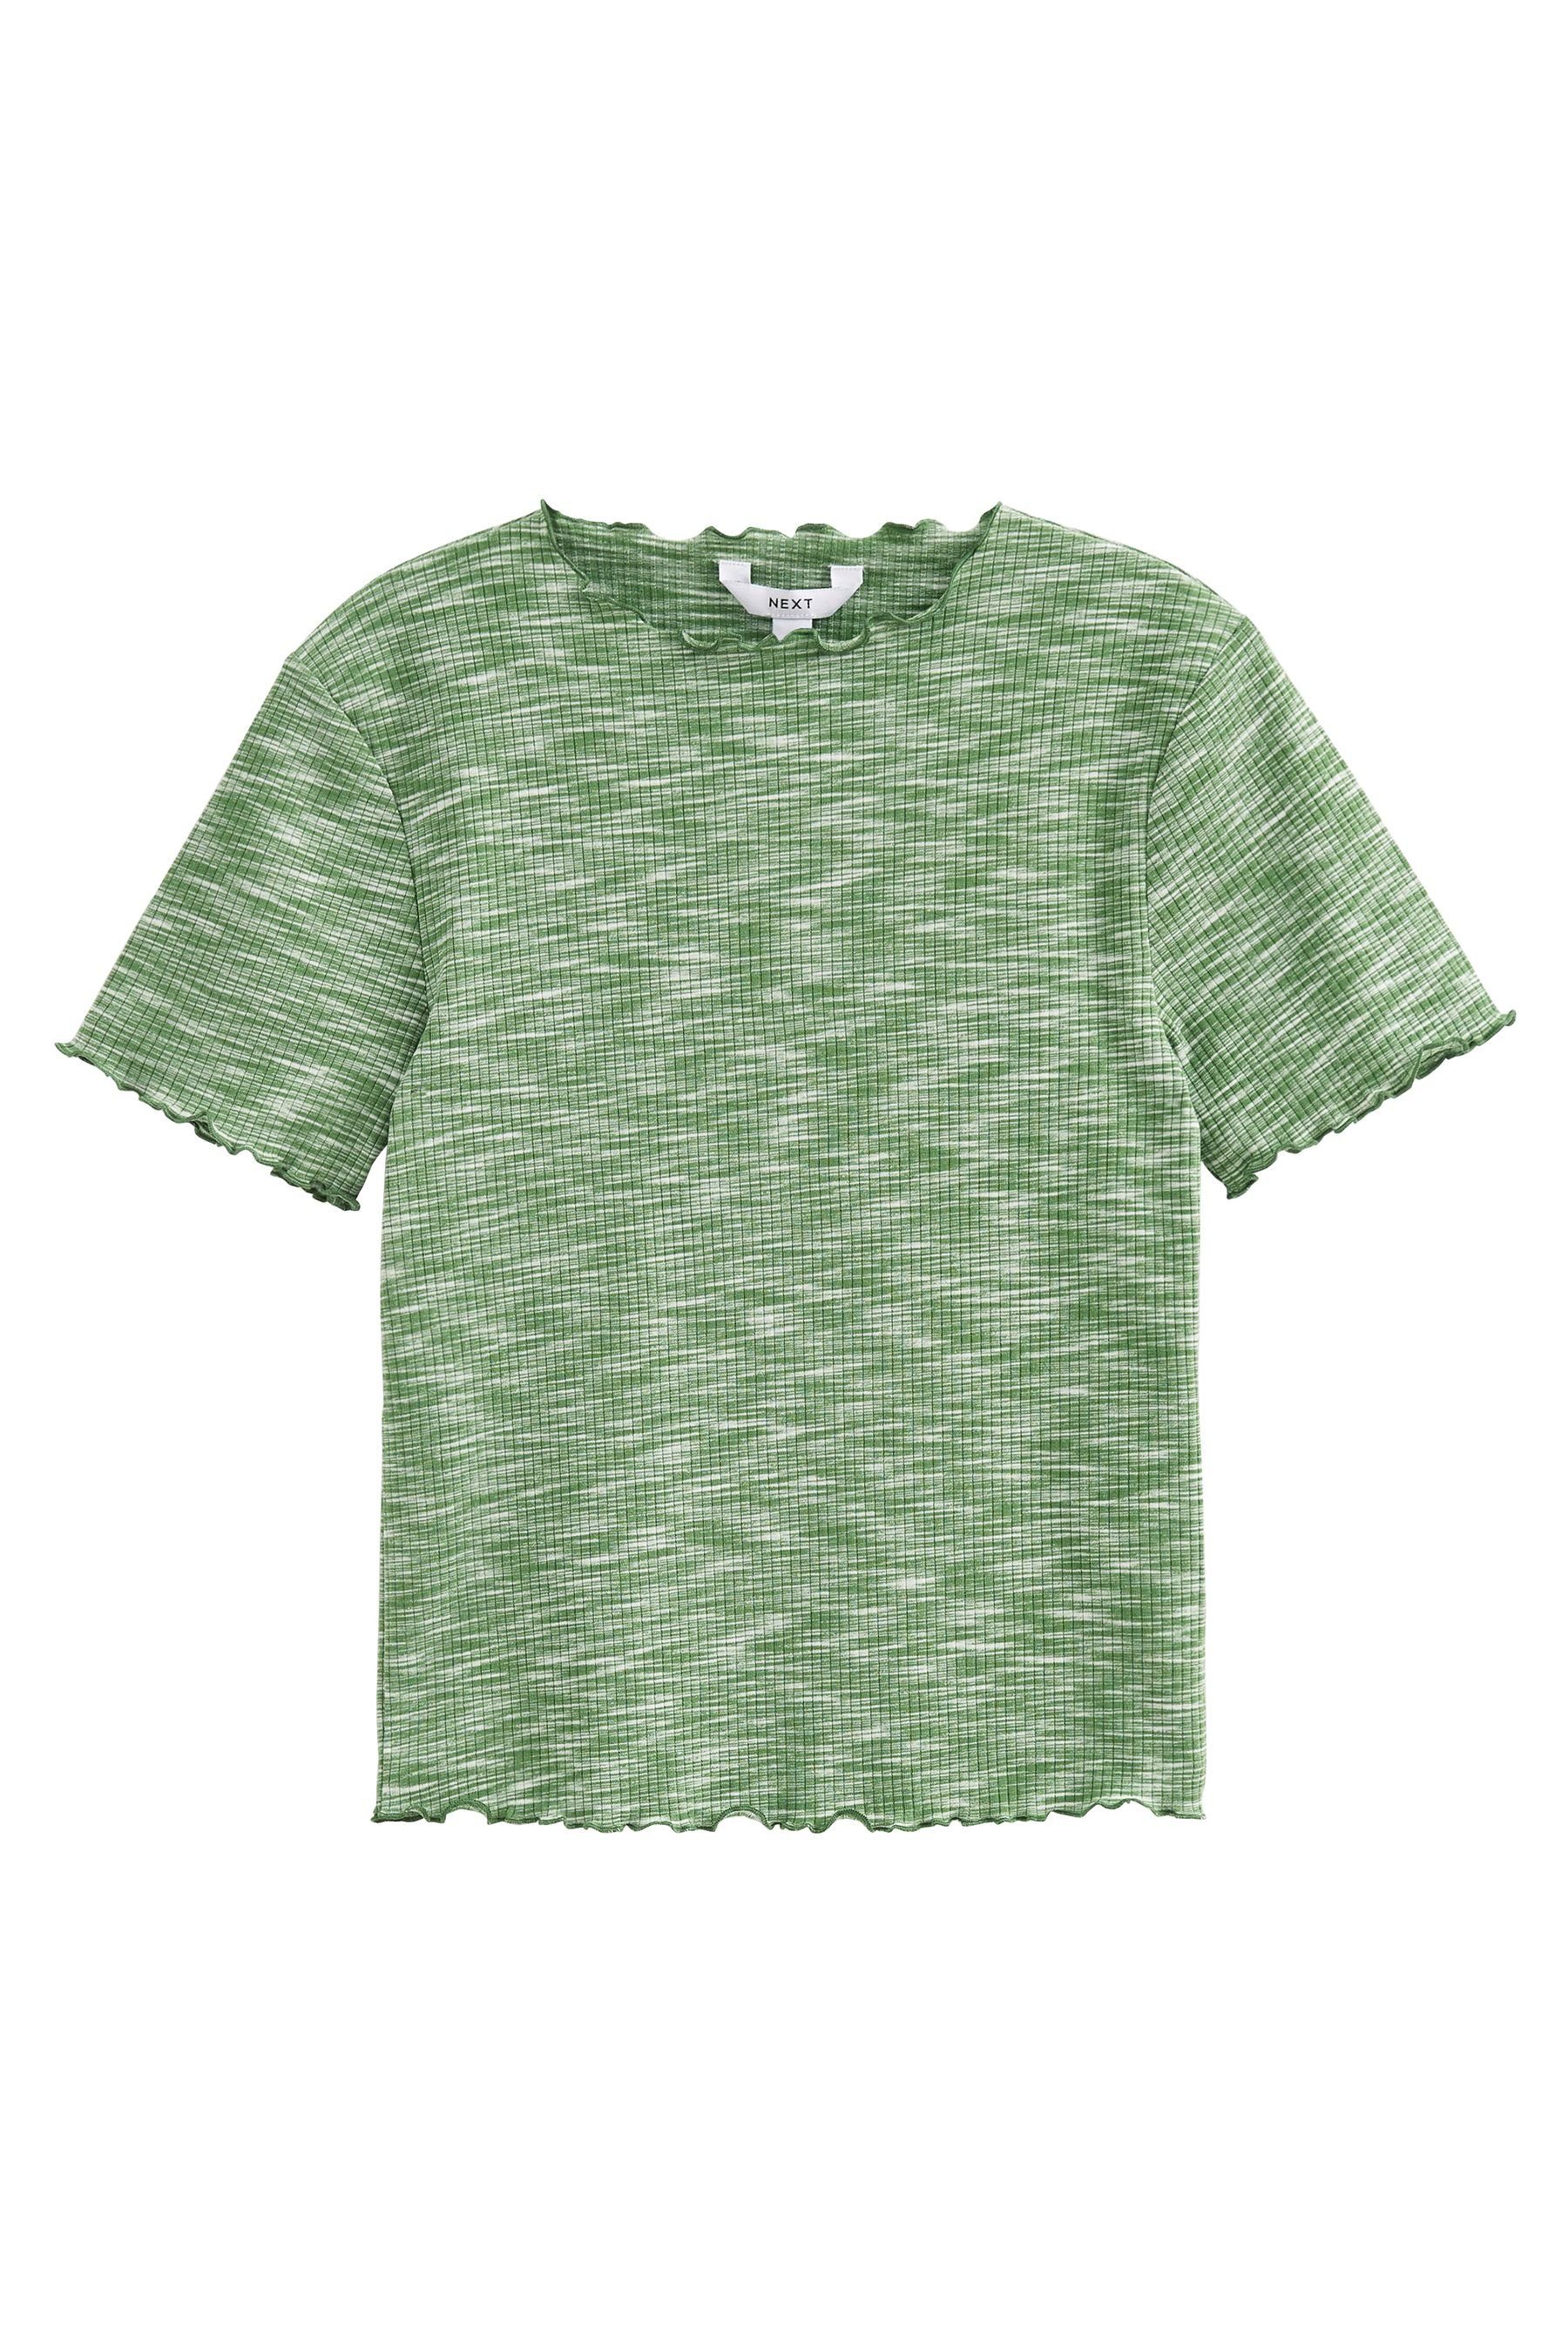 Saum geriffeltem Next (1-tlg) T-Shirt Space-Dye-Optik in T-Shirt mit